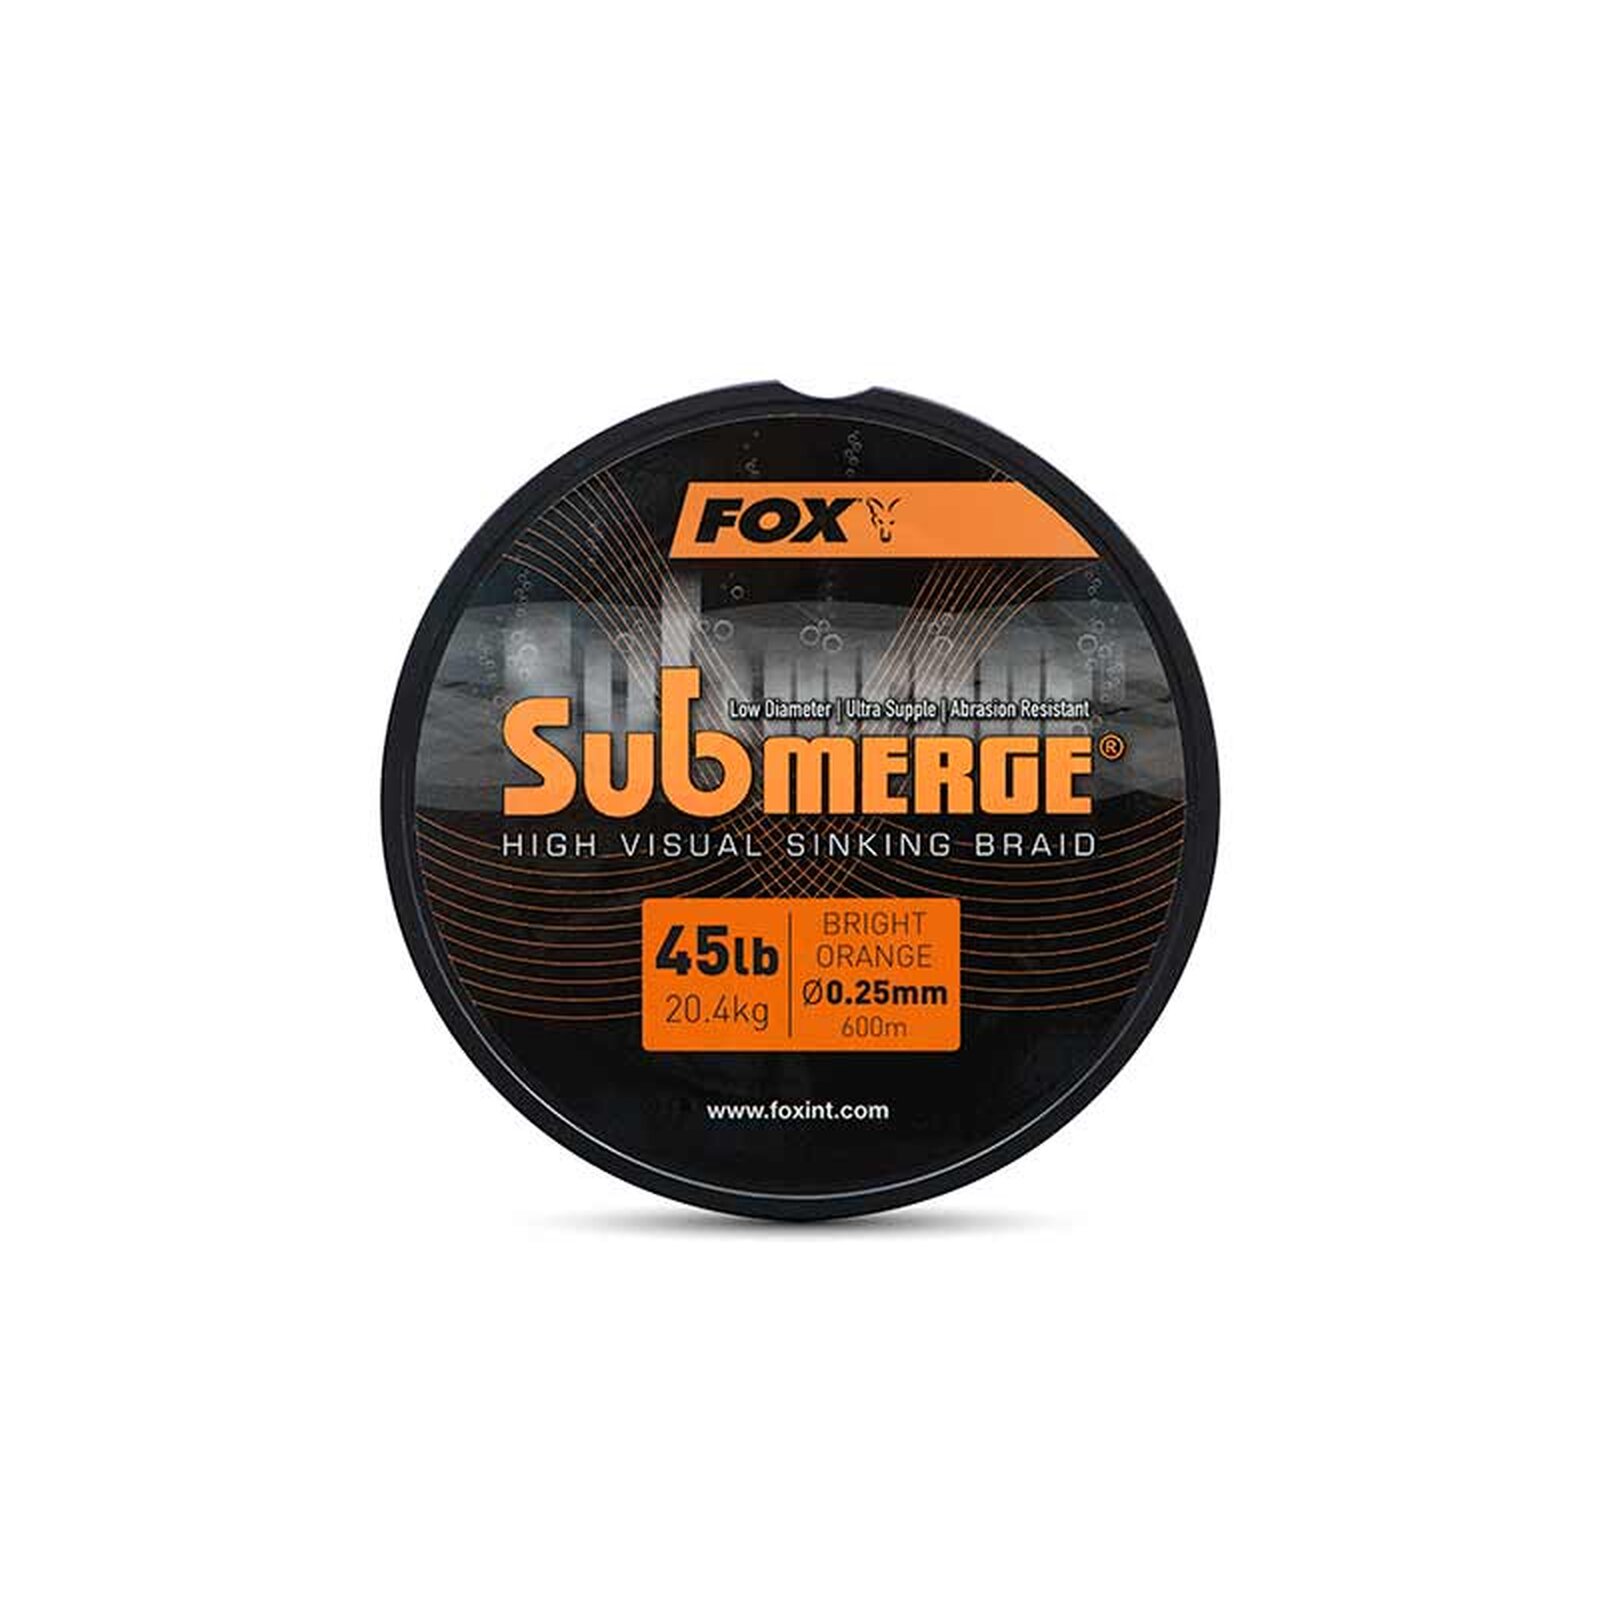 FOX Submerge High Visual Sinking Braid Bright Orange